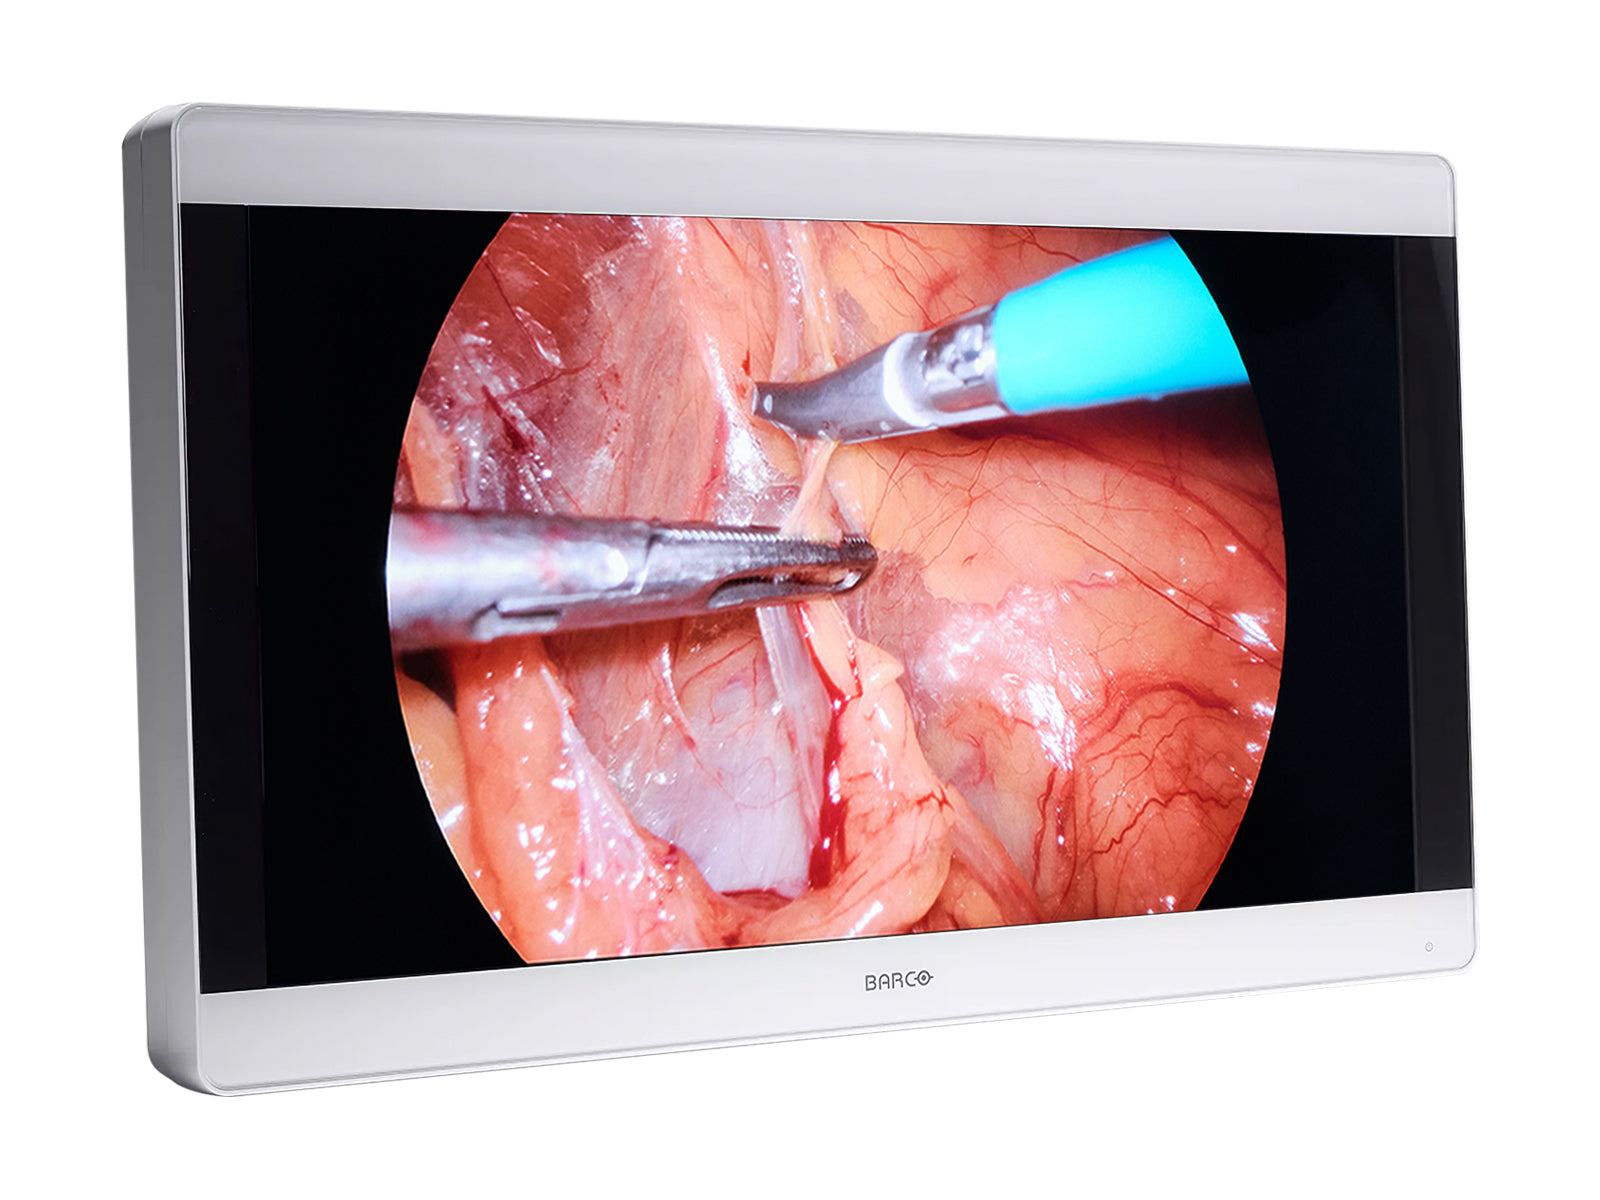 Barco MDSC-8232 31" LED 4K Color Surgical Medical Display Monitor (K9307922) Monitors.com 